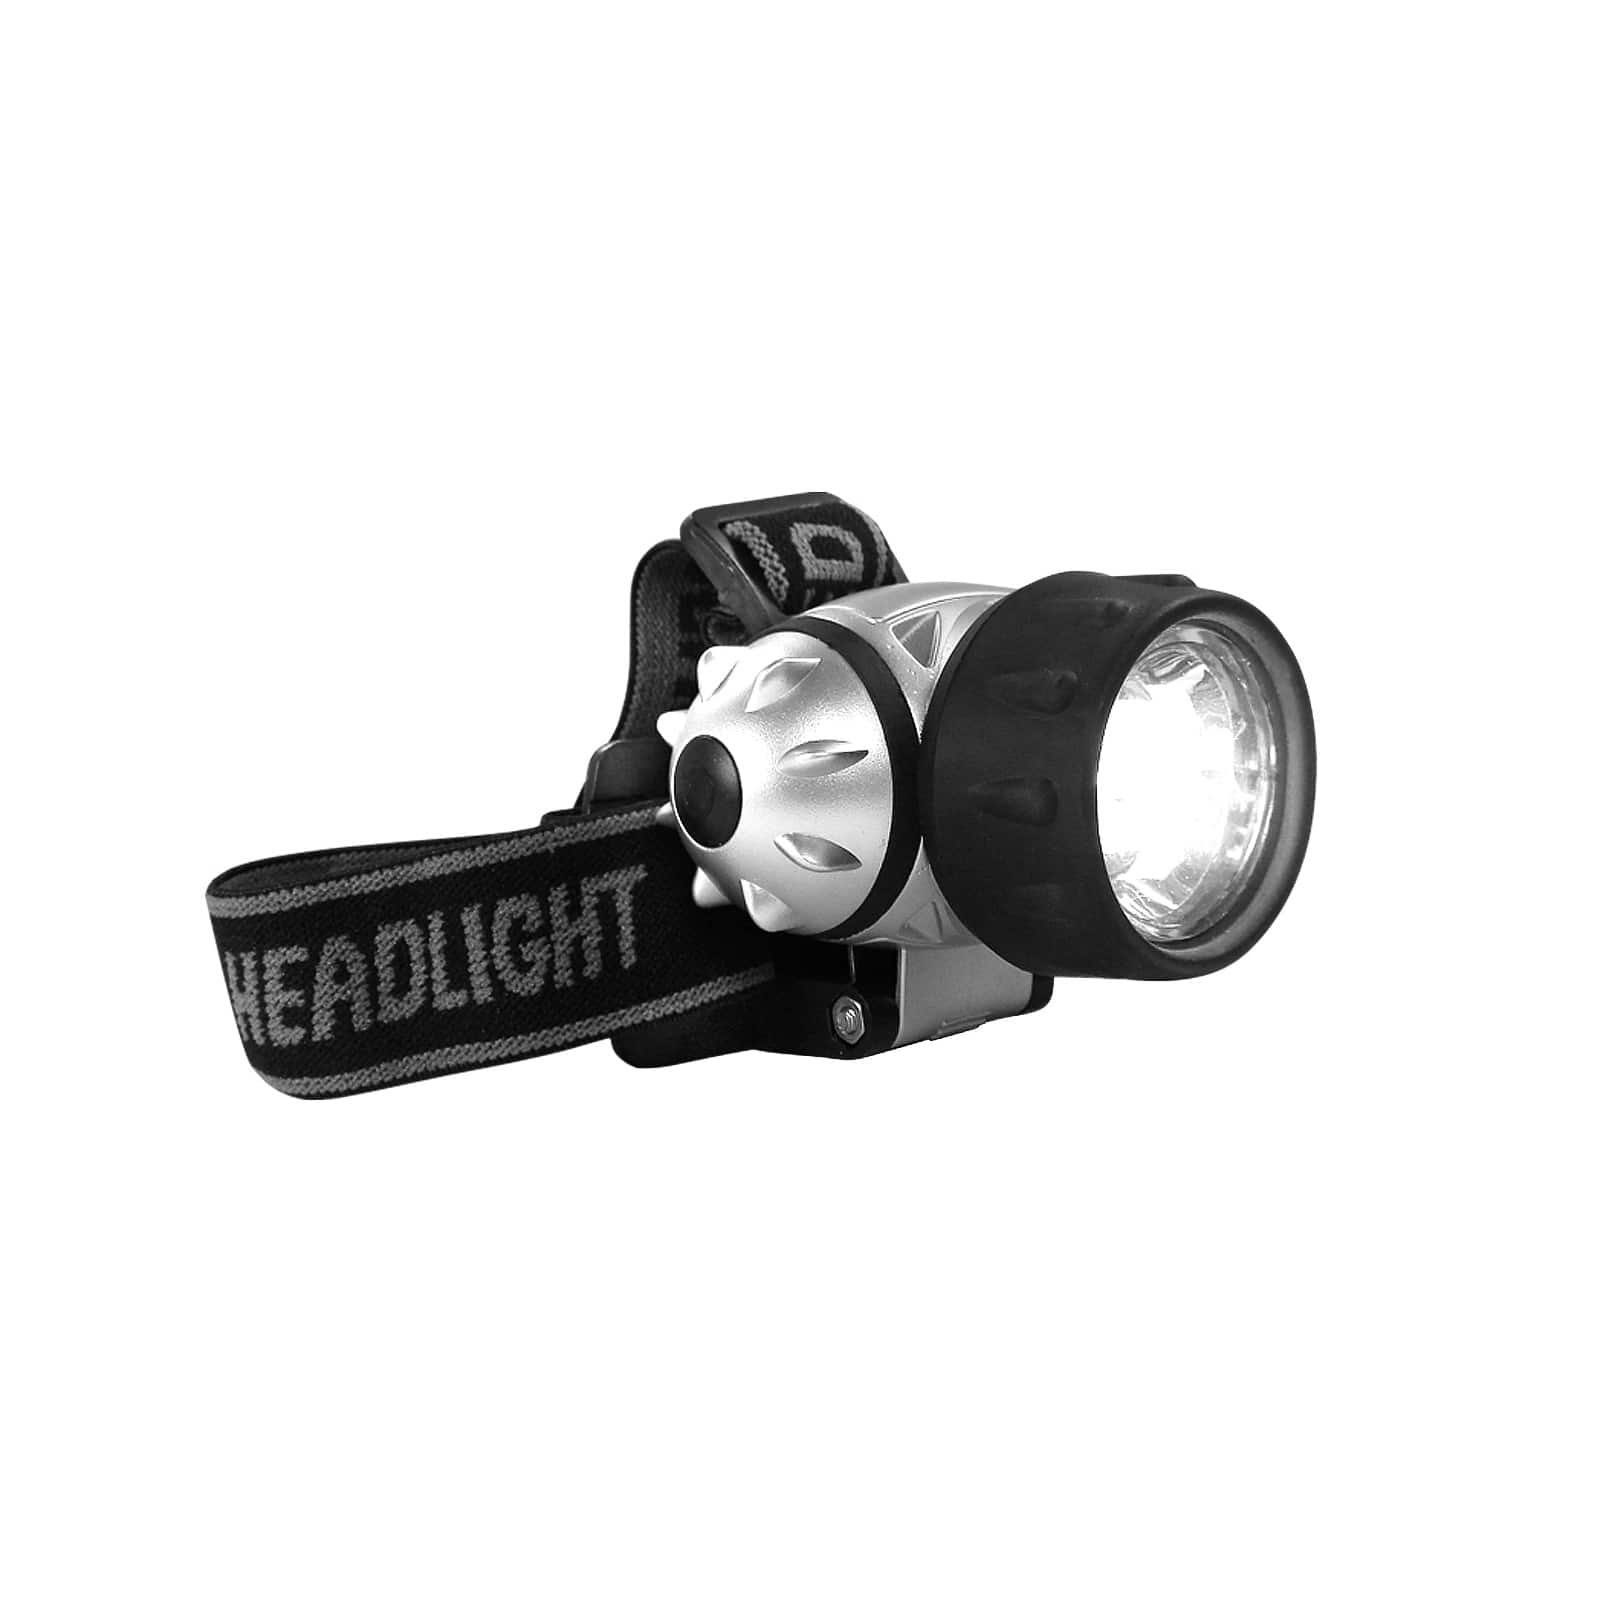 nach LEDs, 7 Stirnleuchte/Kopflampe Stirnlampe LED über Wasserfest IP44 LED mit Leuchtmodi, 3 EAXUS Dimmbar